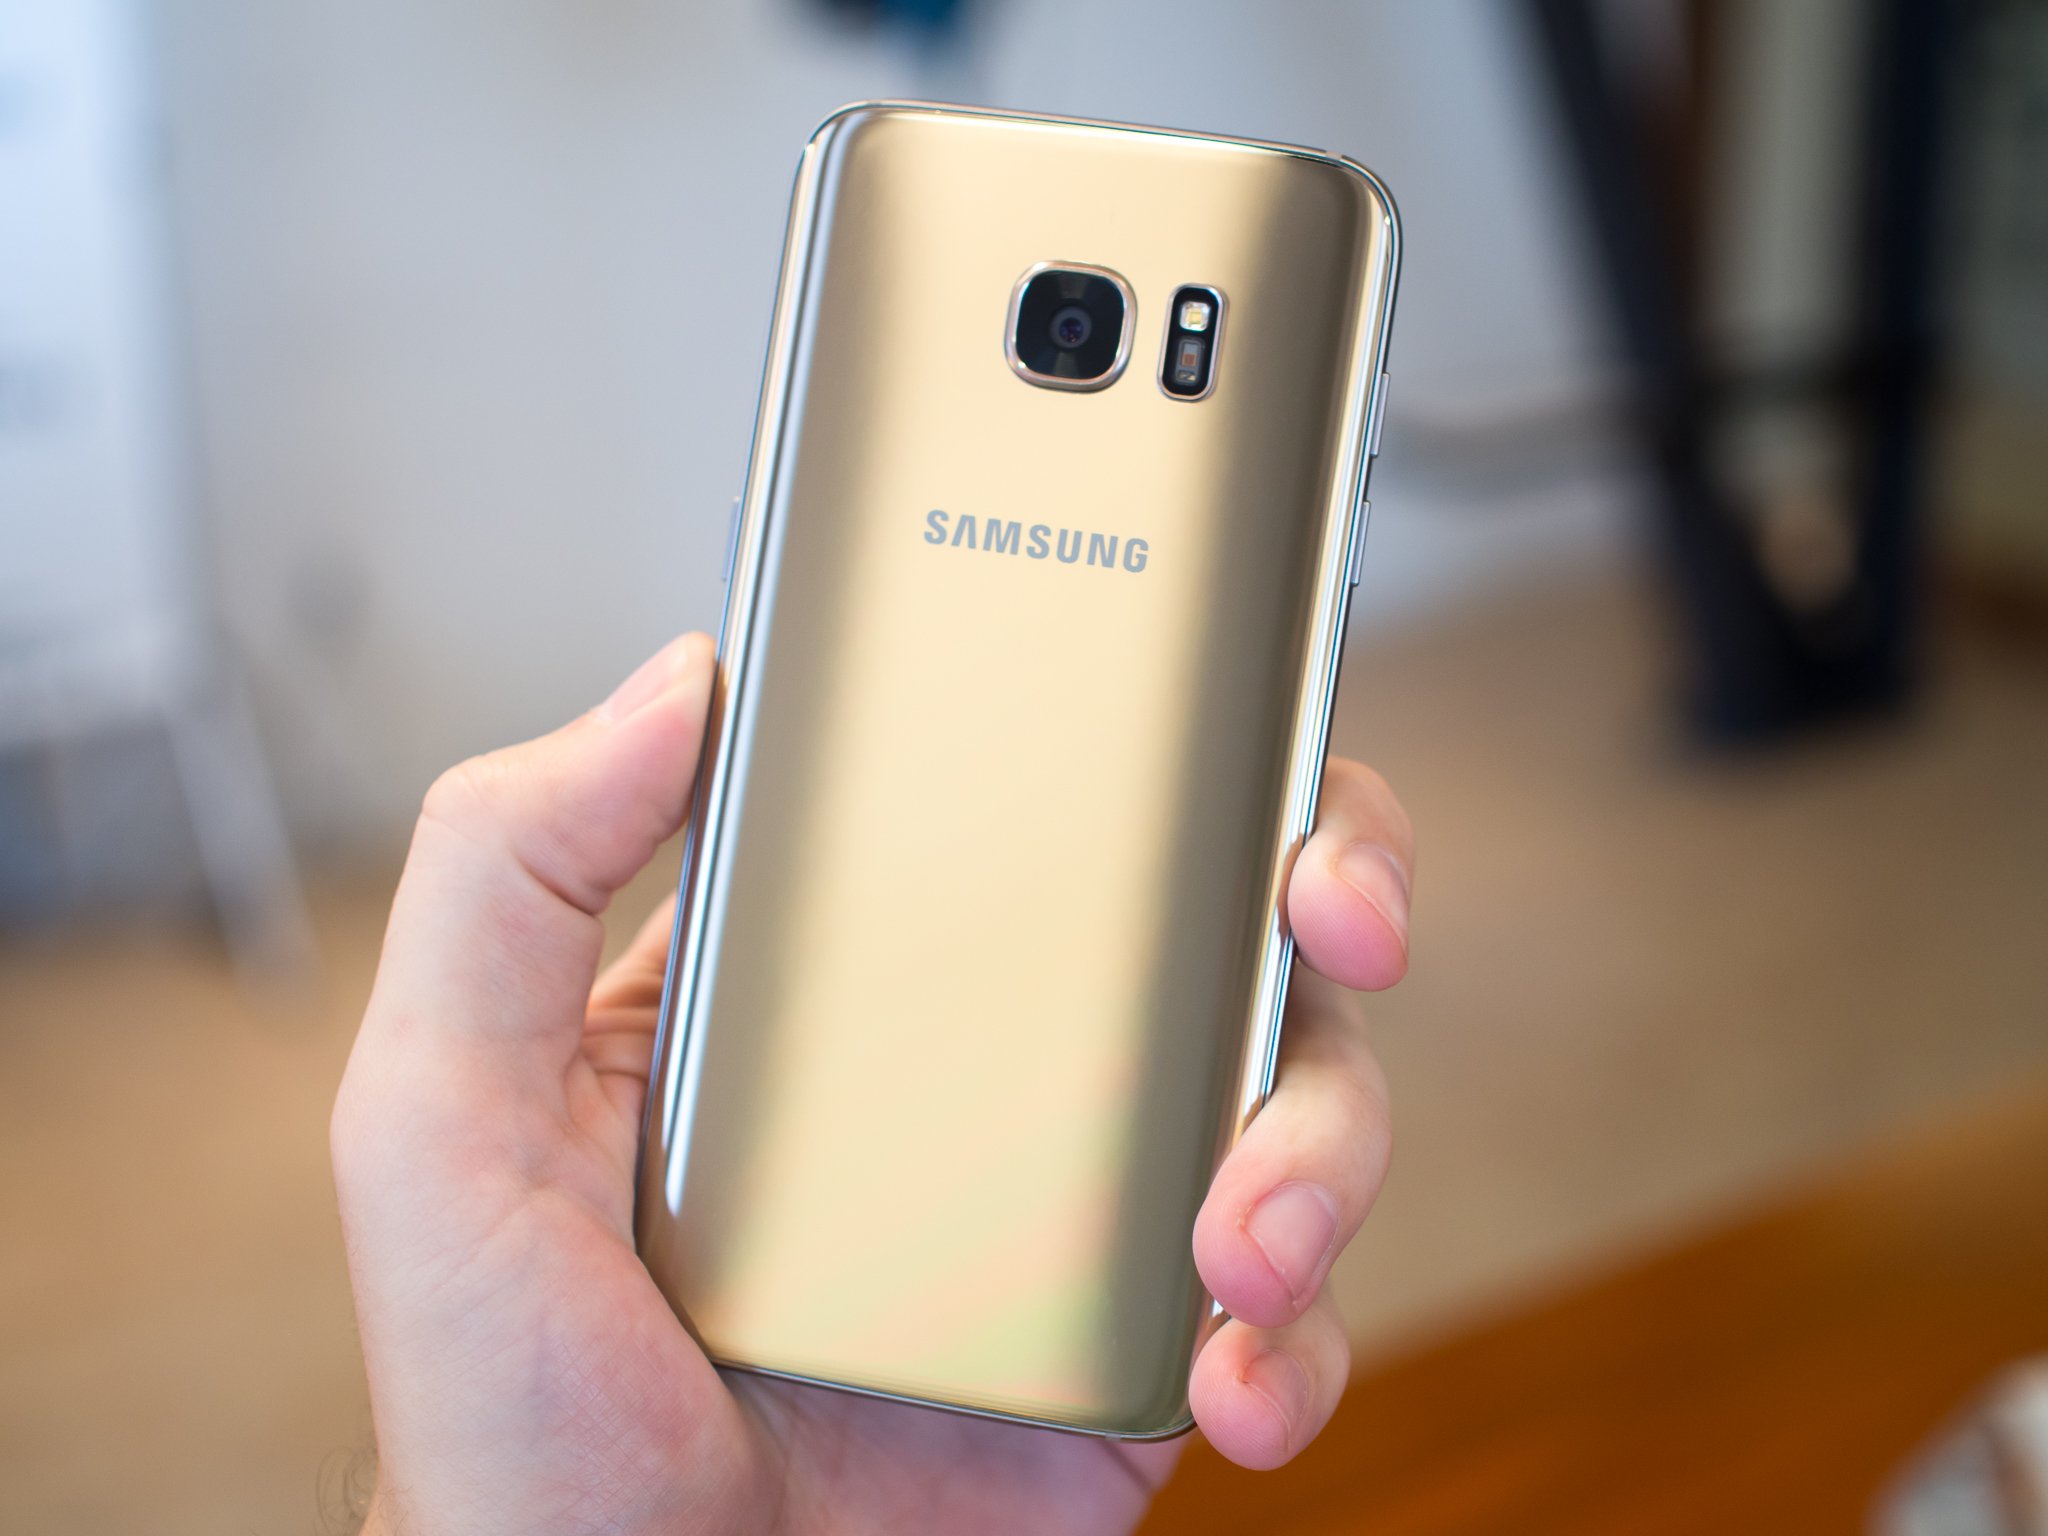 Galaxy S7 edge in gold